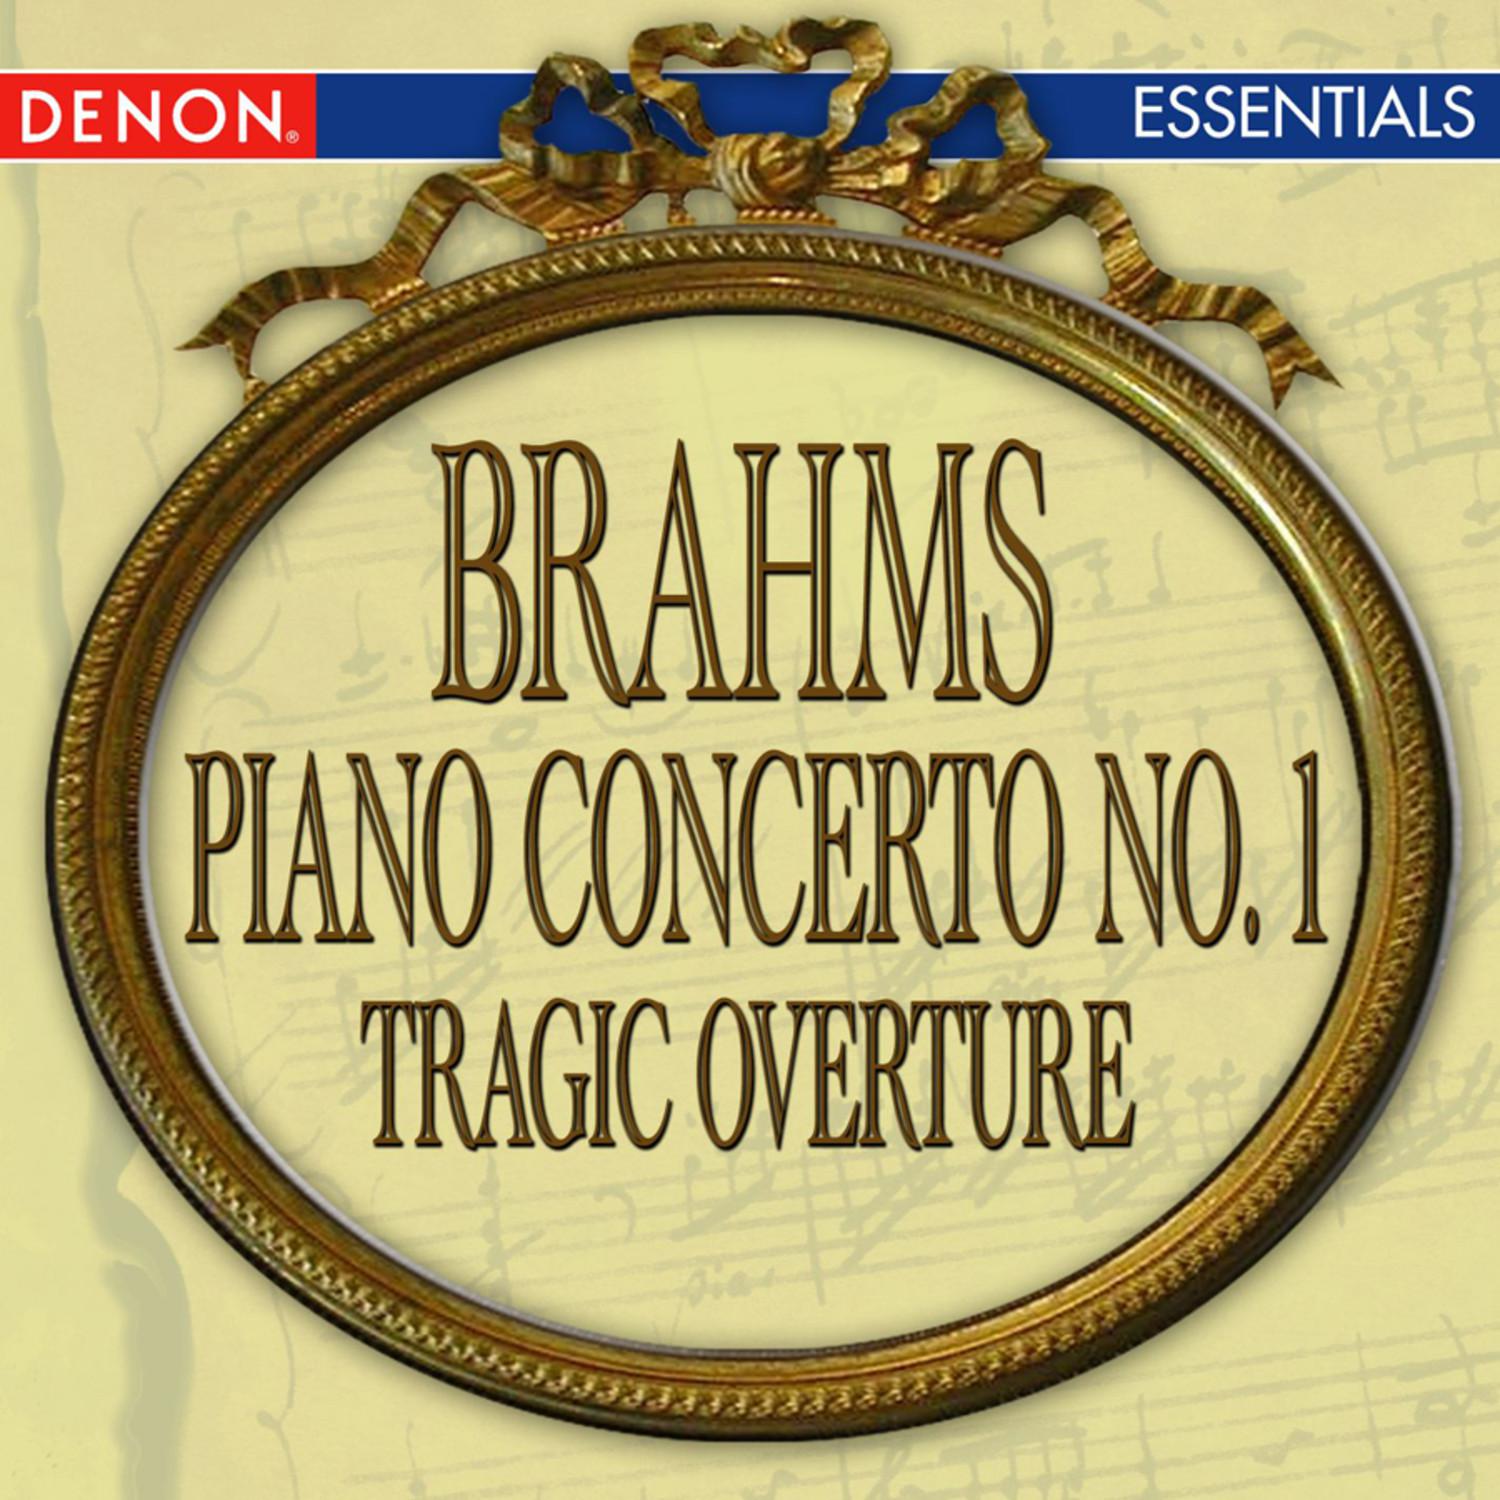 Brahms: Piano Concerto No. 1 - Tragic Overture